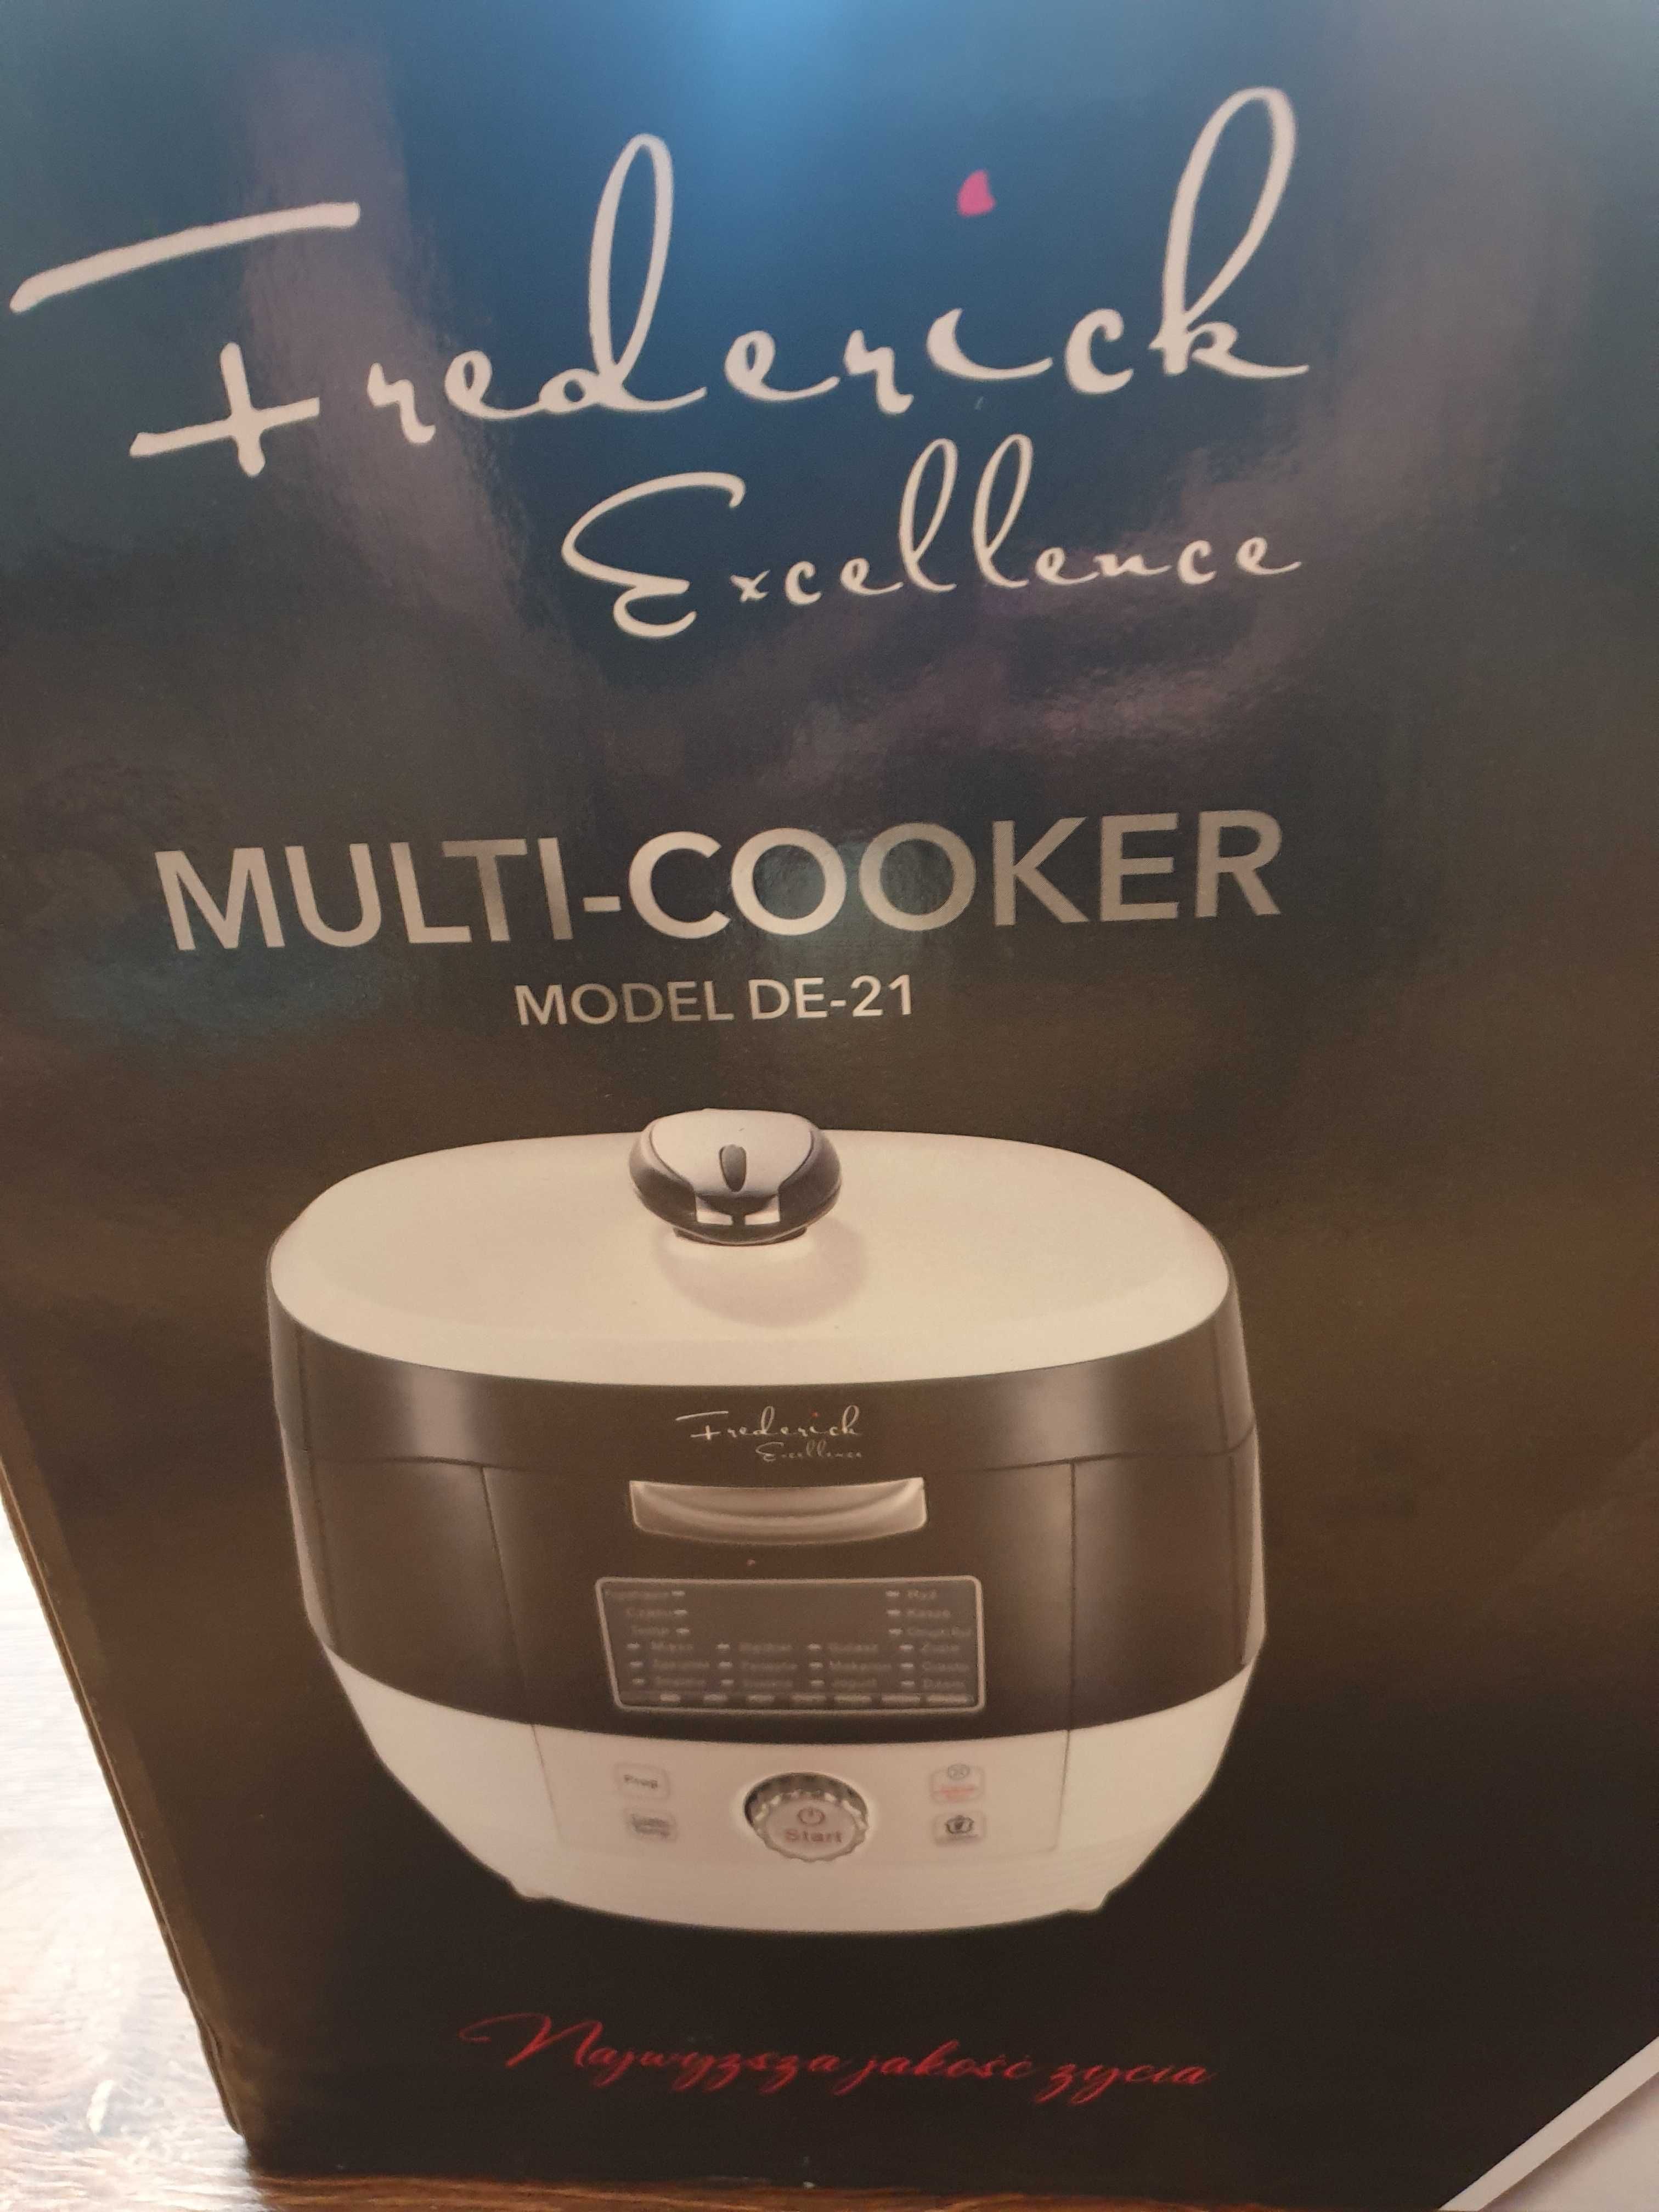 Multi cooker frederick excellence de-21